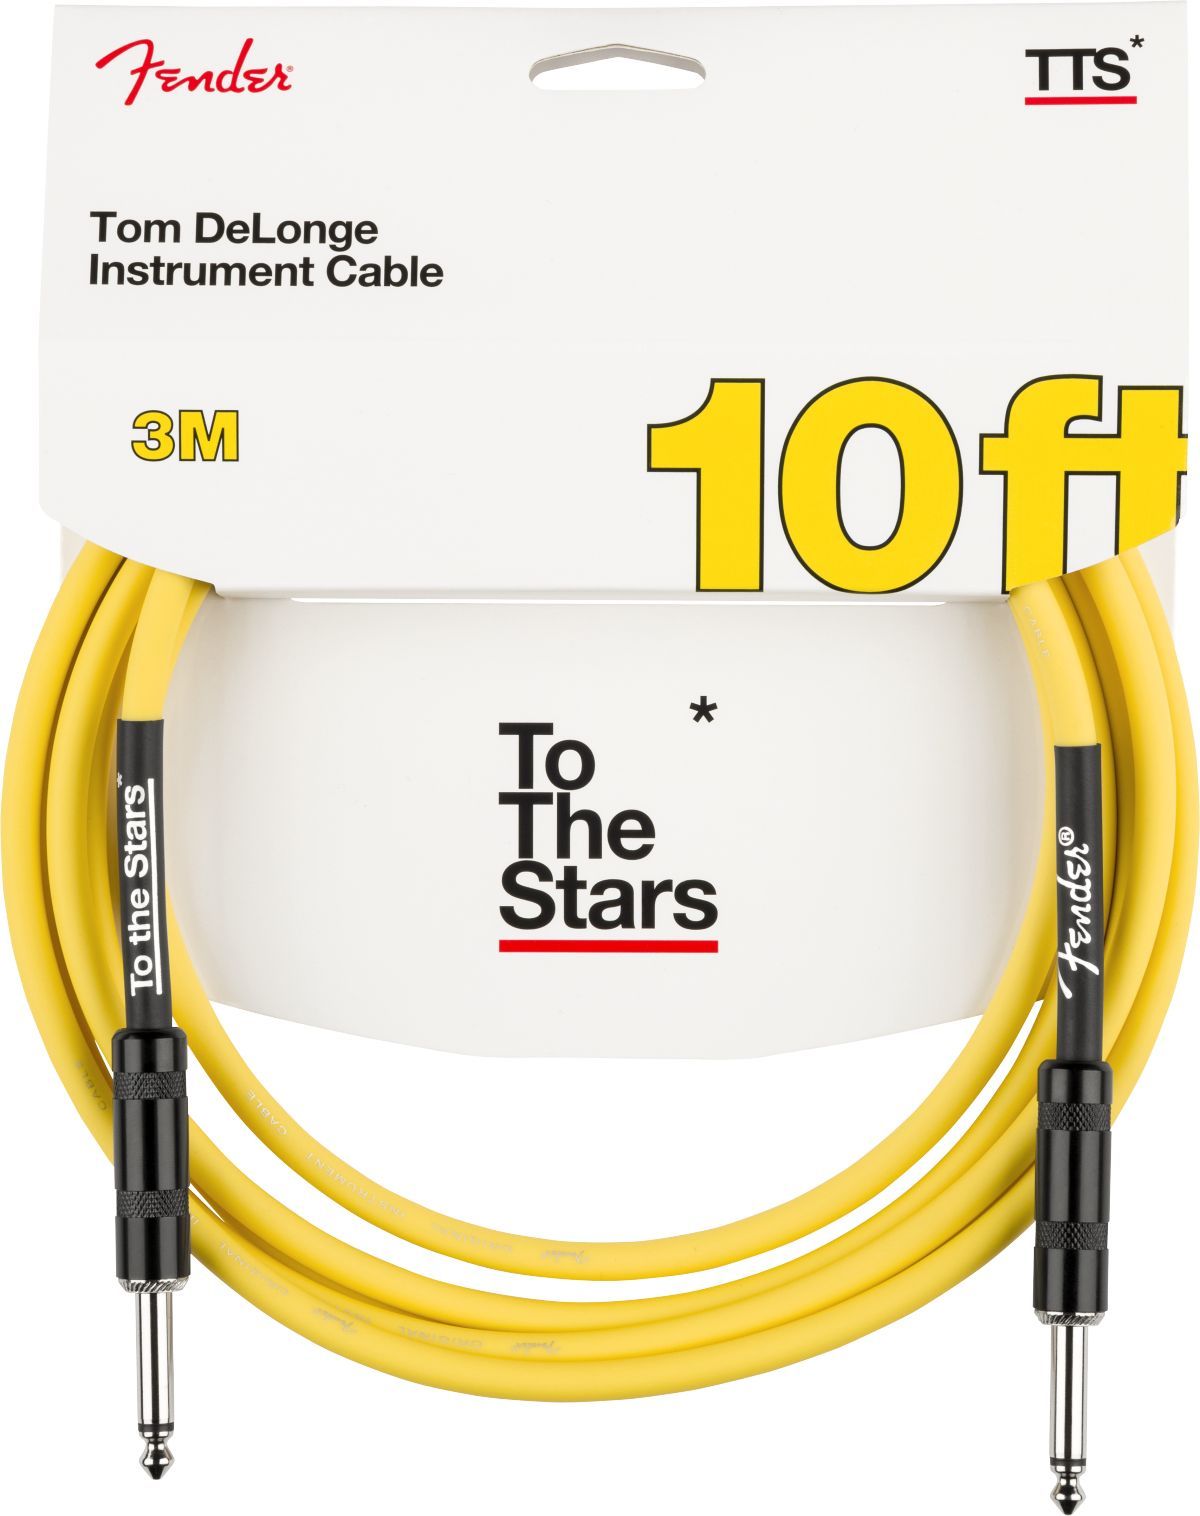 Fender Tom DeLonge 10 To The Stars Instrument Cable Graffiti Yellow